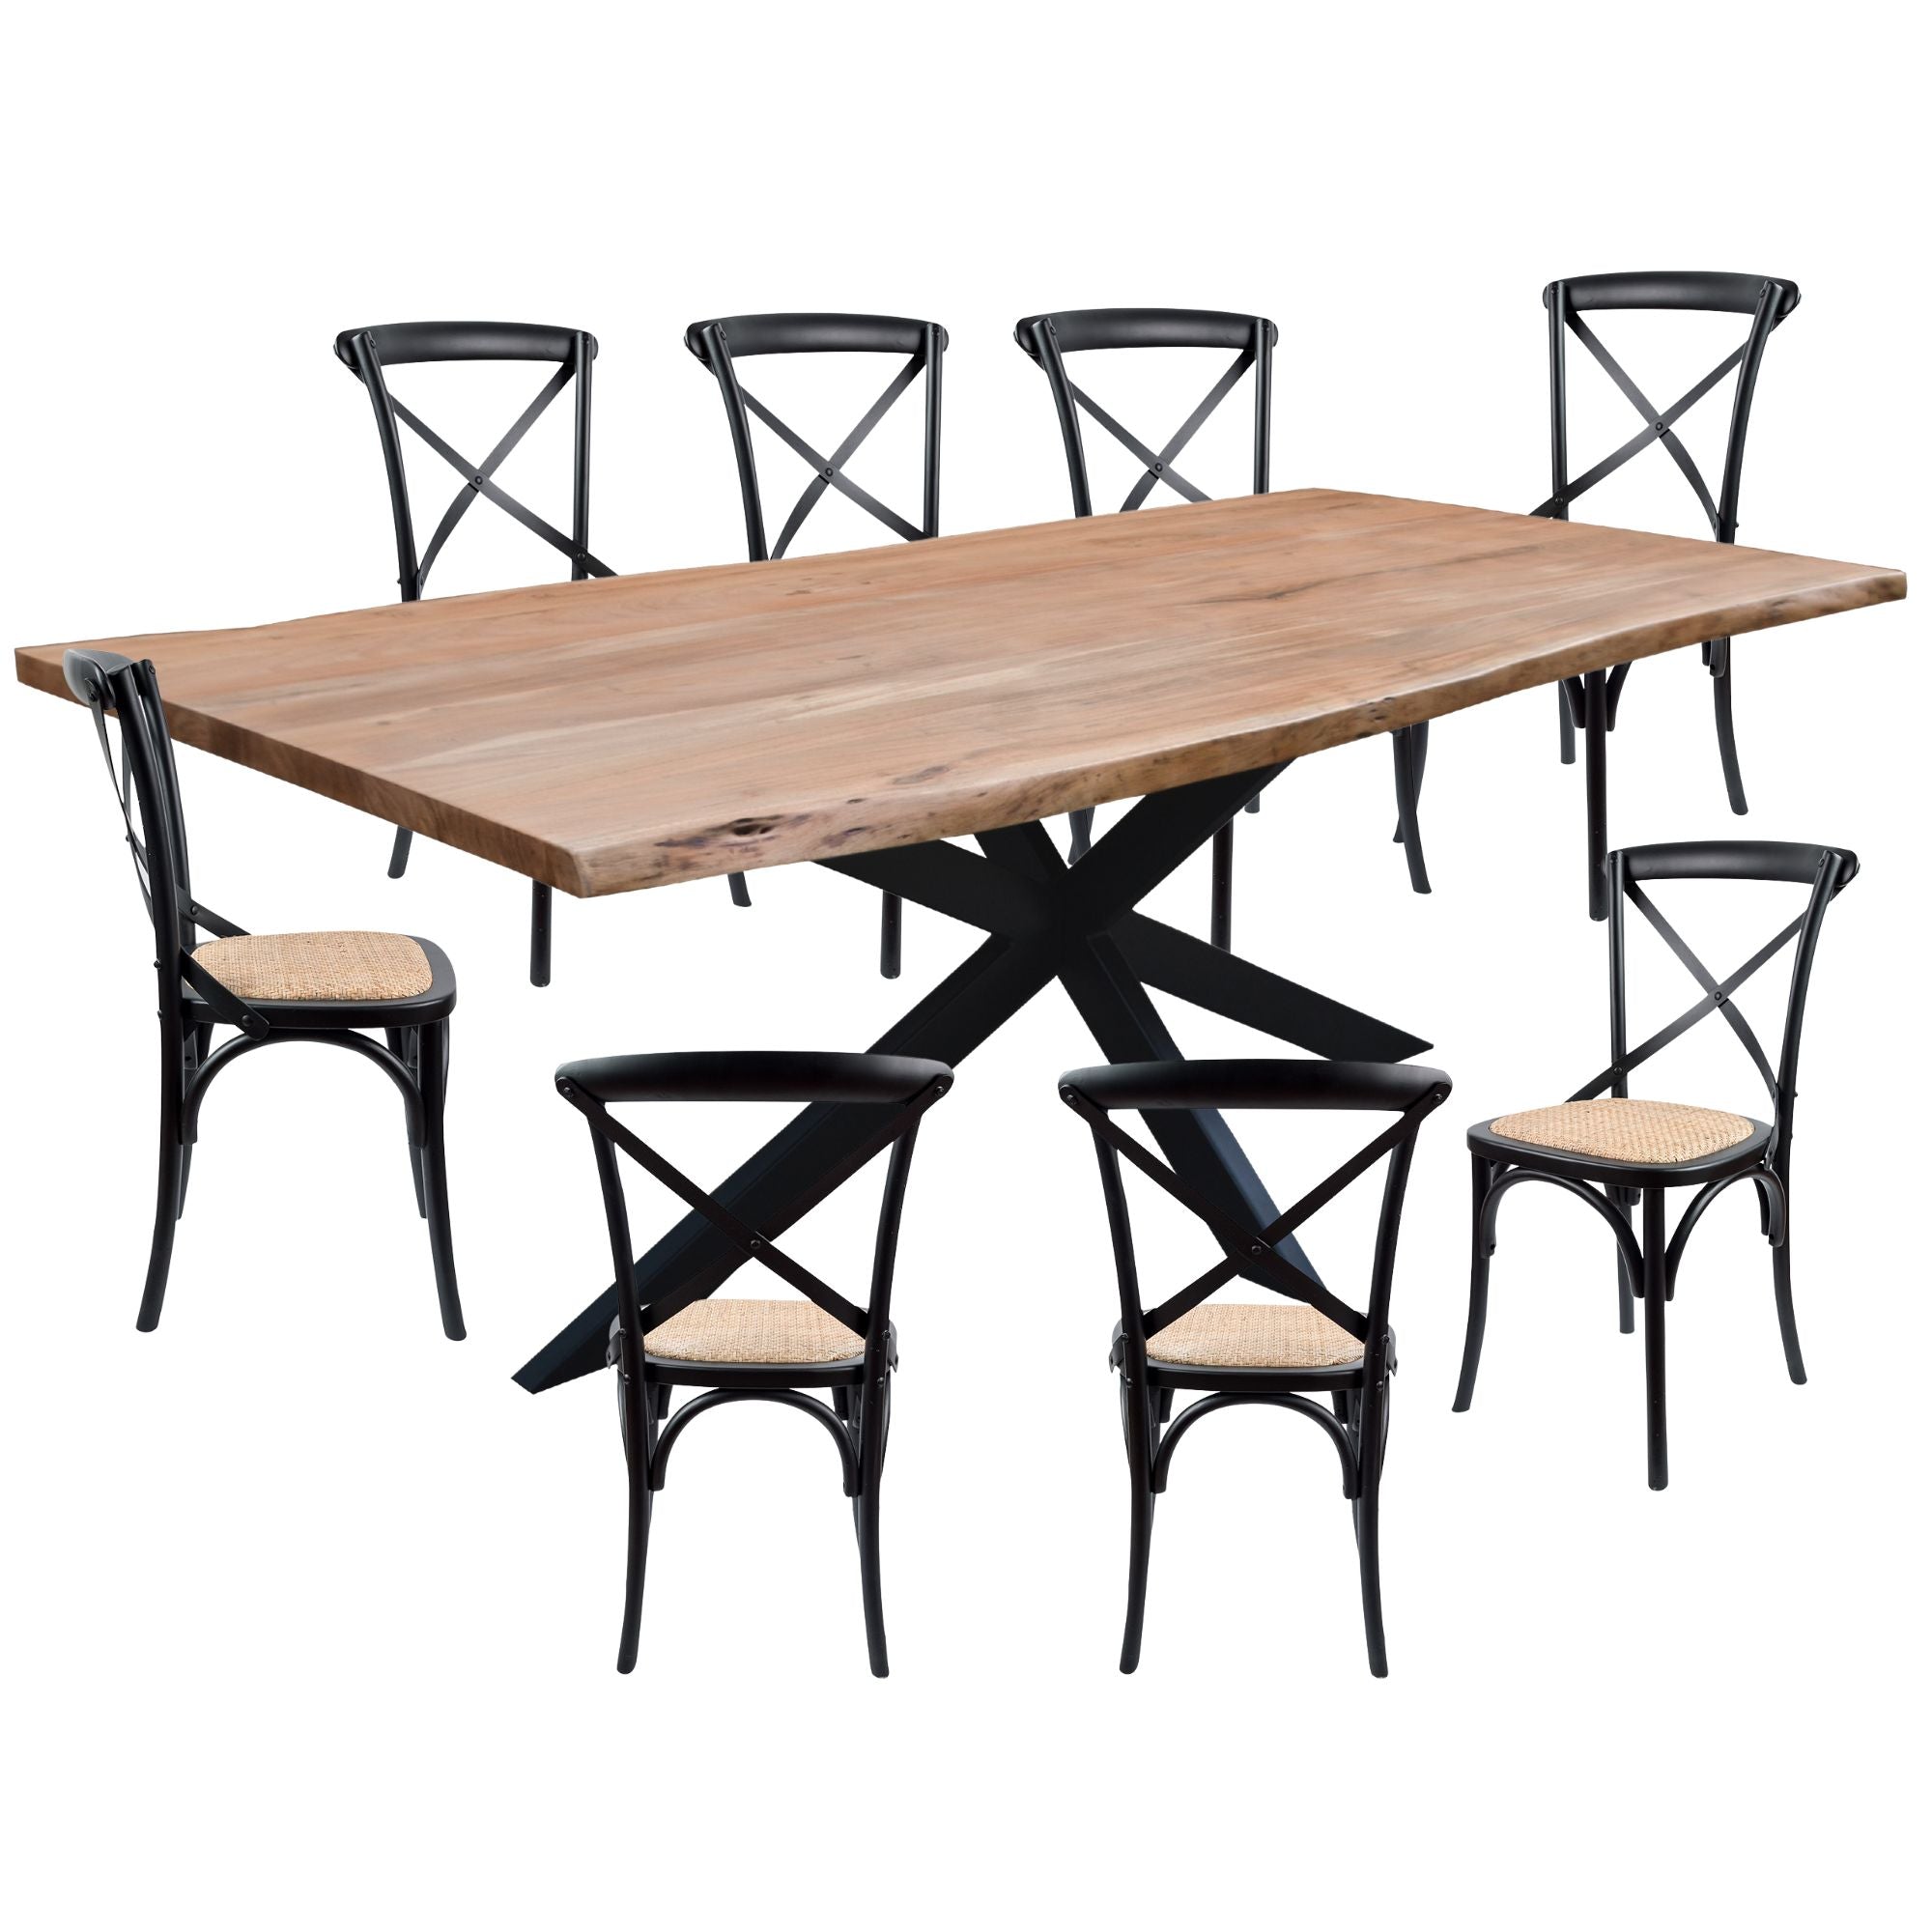 Lantana 9pc 240cm Dining Table 8 Black X-Back Chair Set Live Edge Acacia Wood - SILBERSHELL